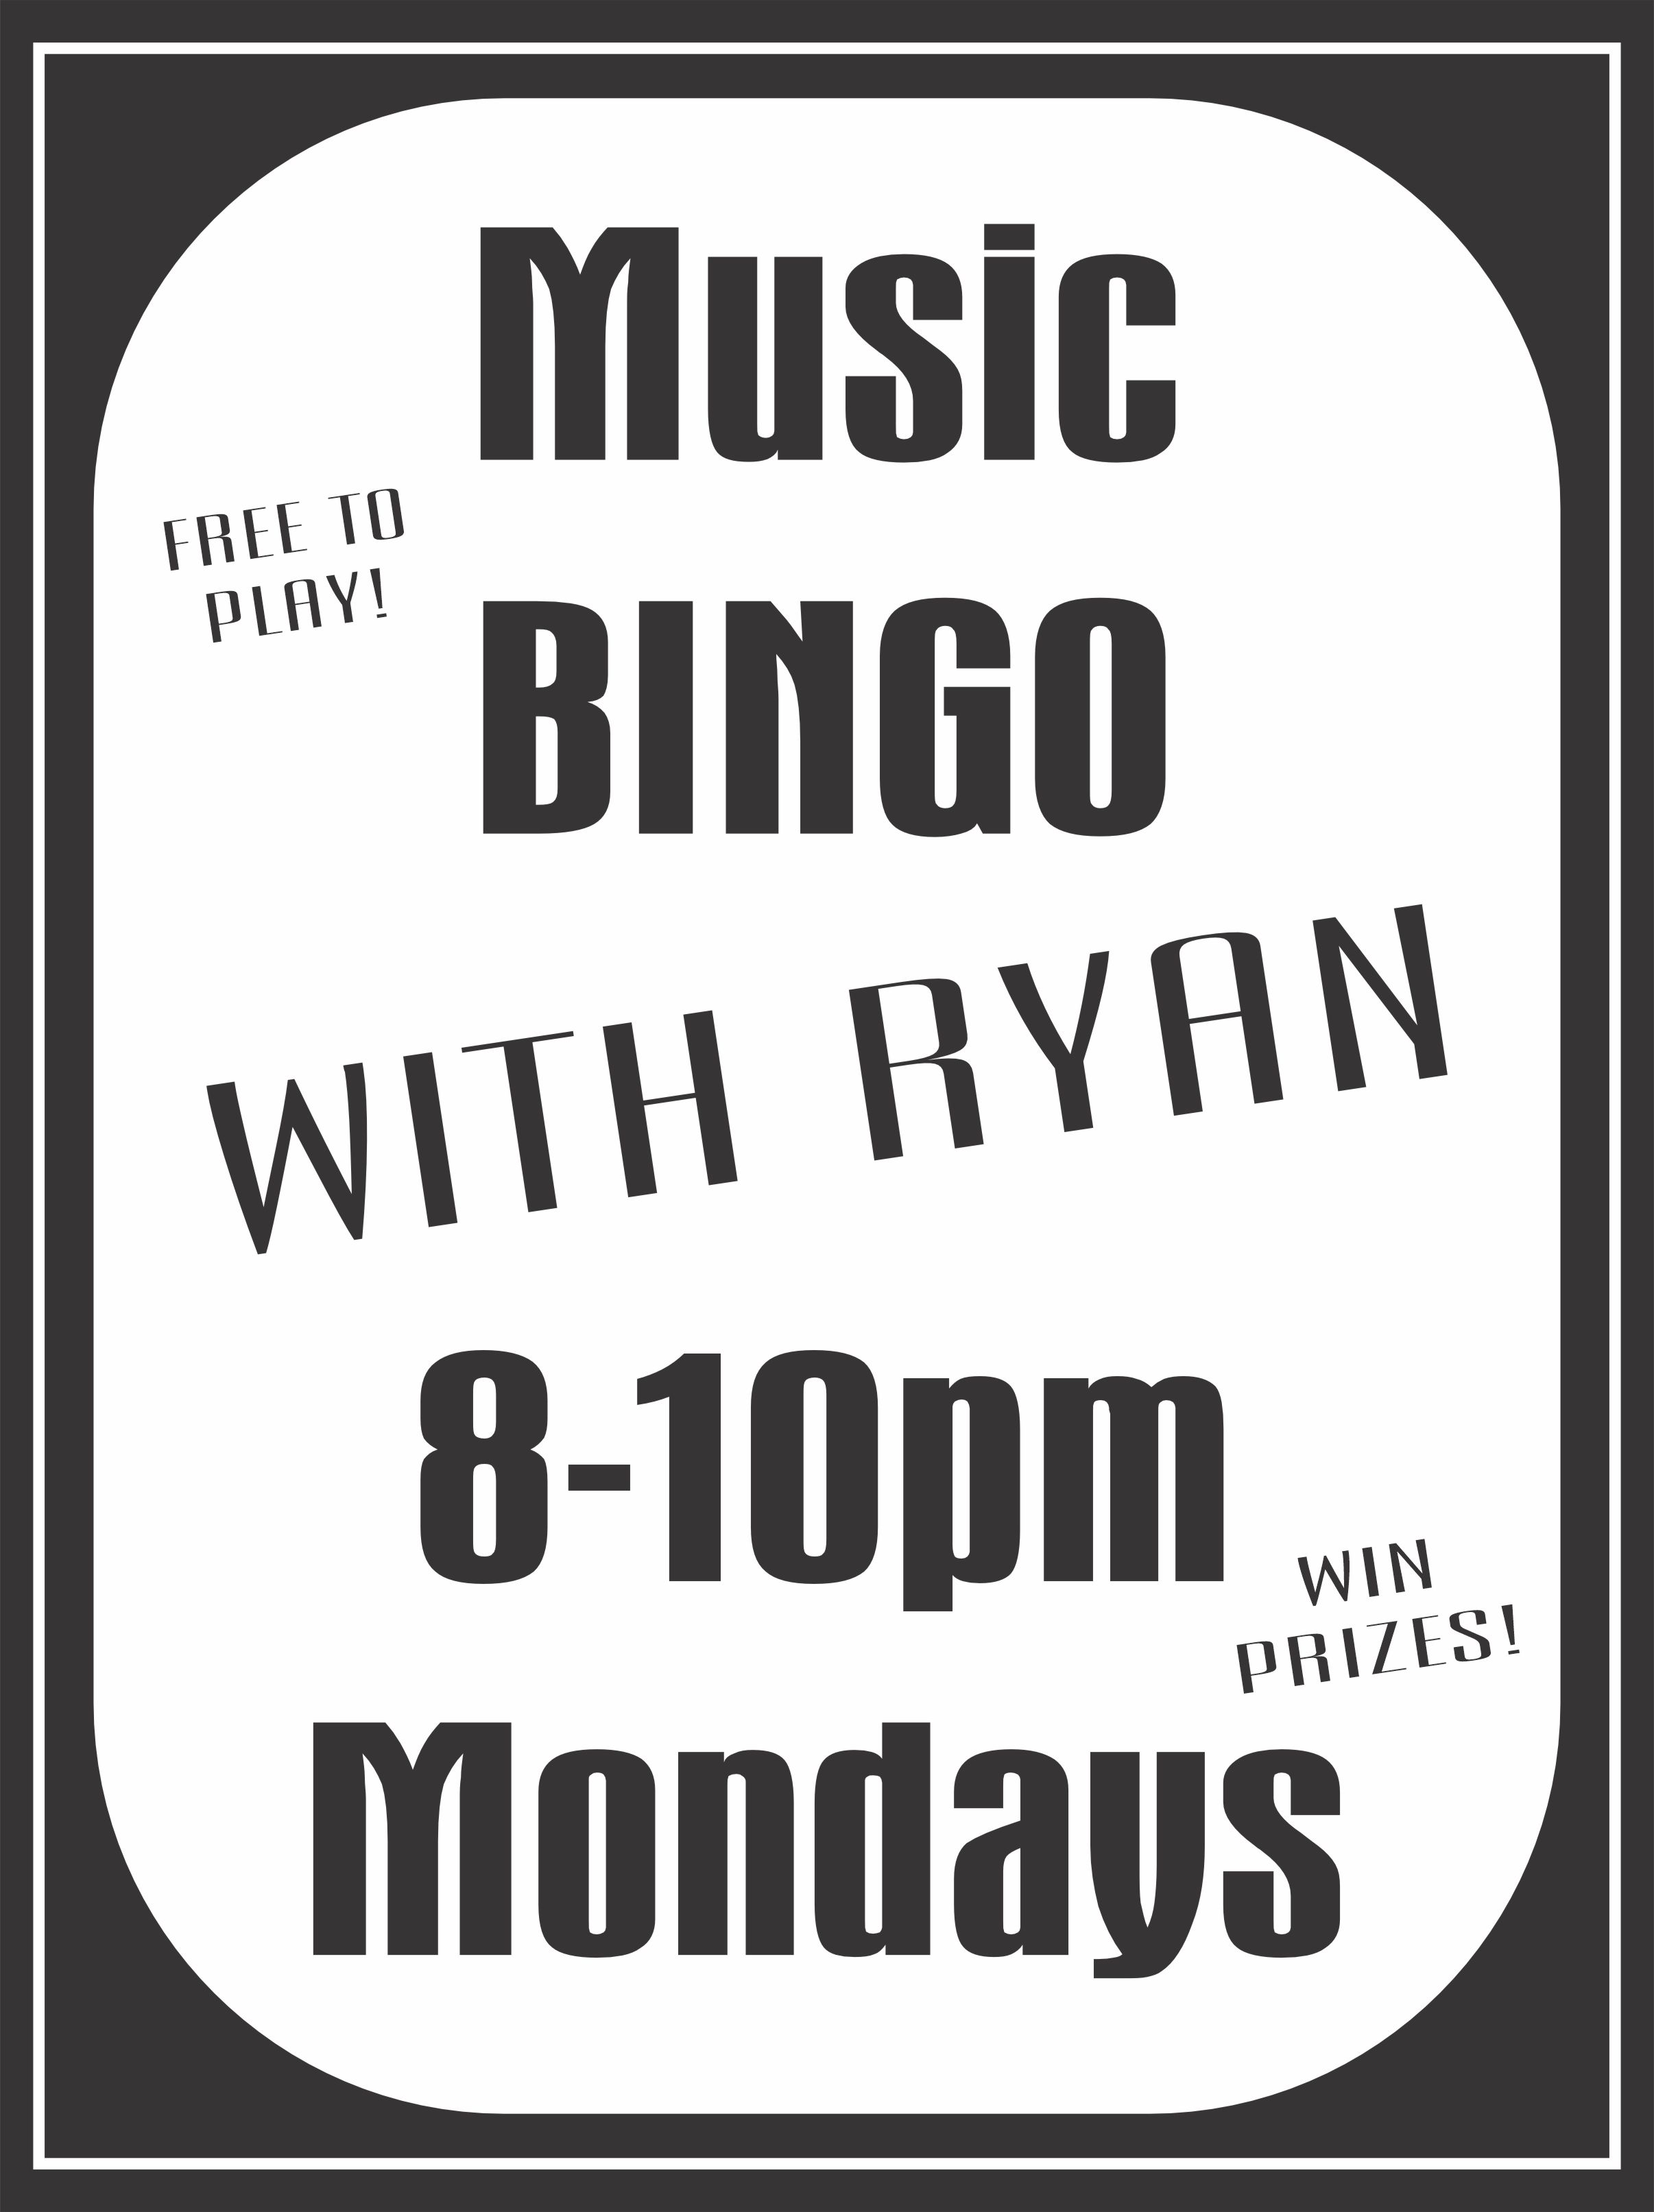 Music BINGO Mondays 8-10pm